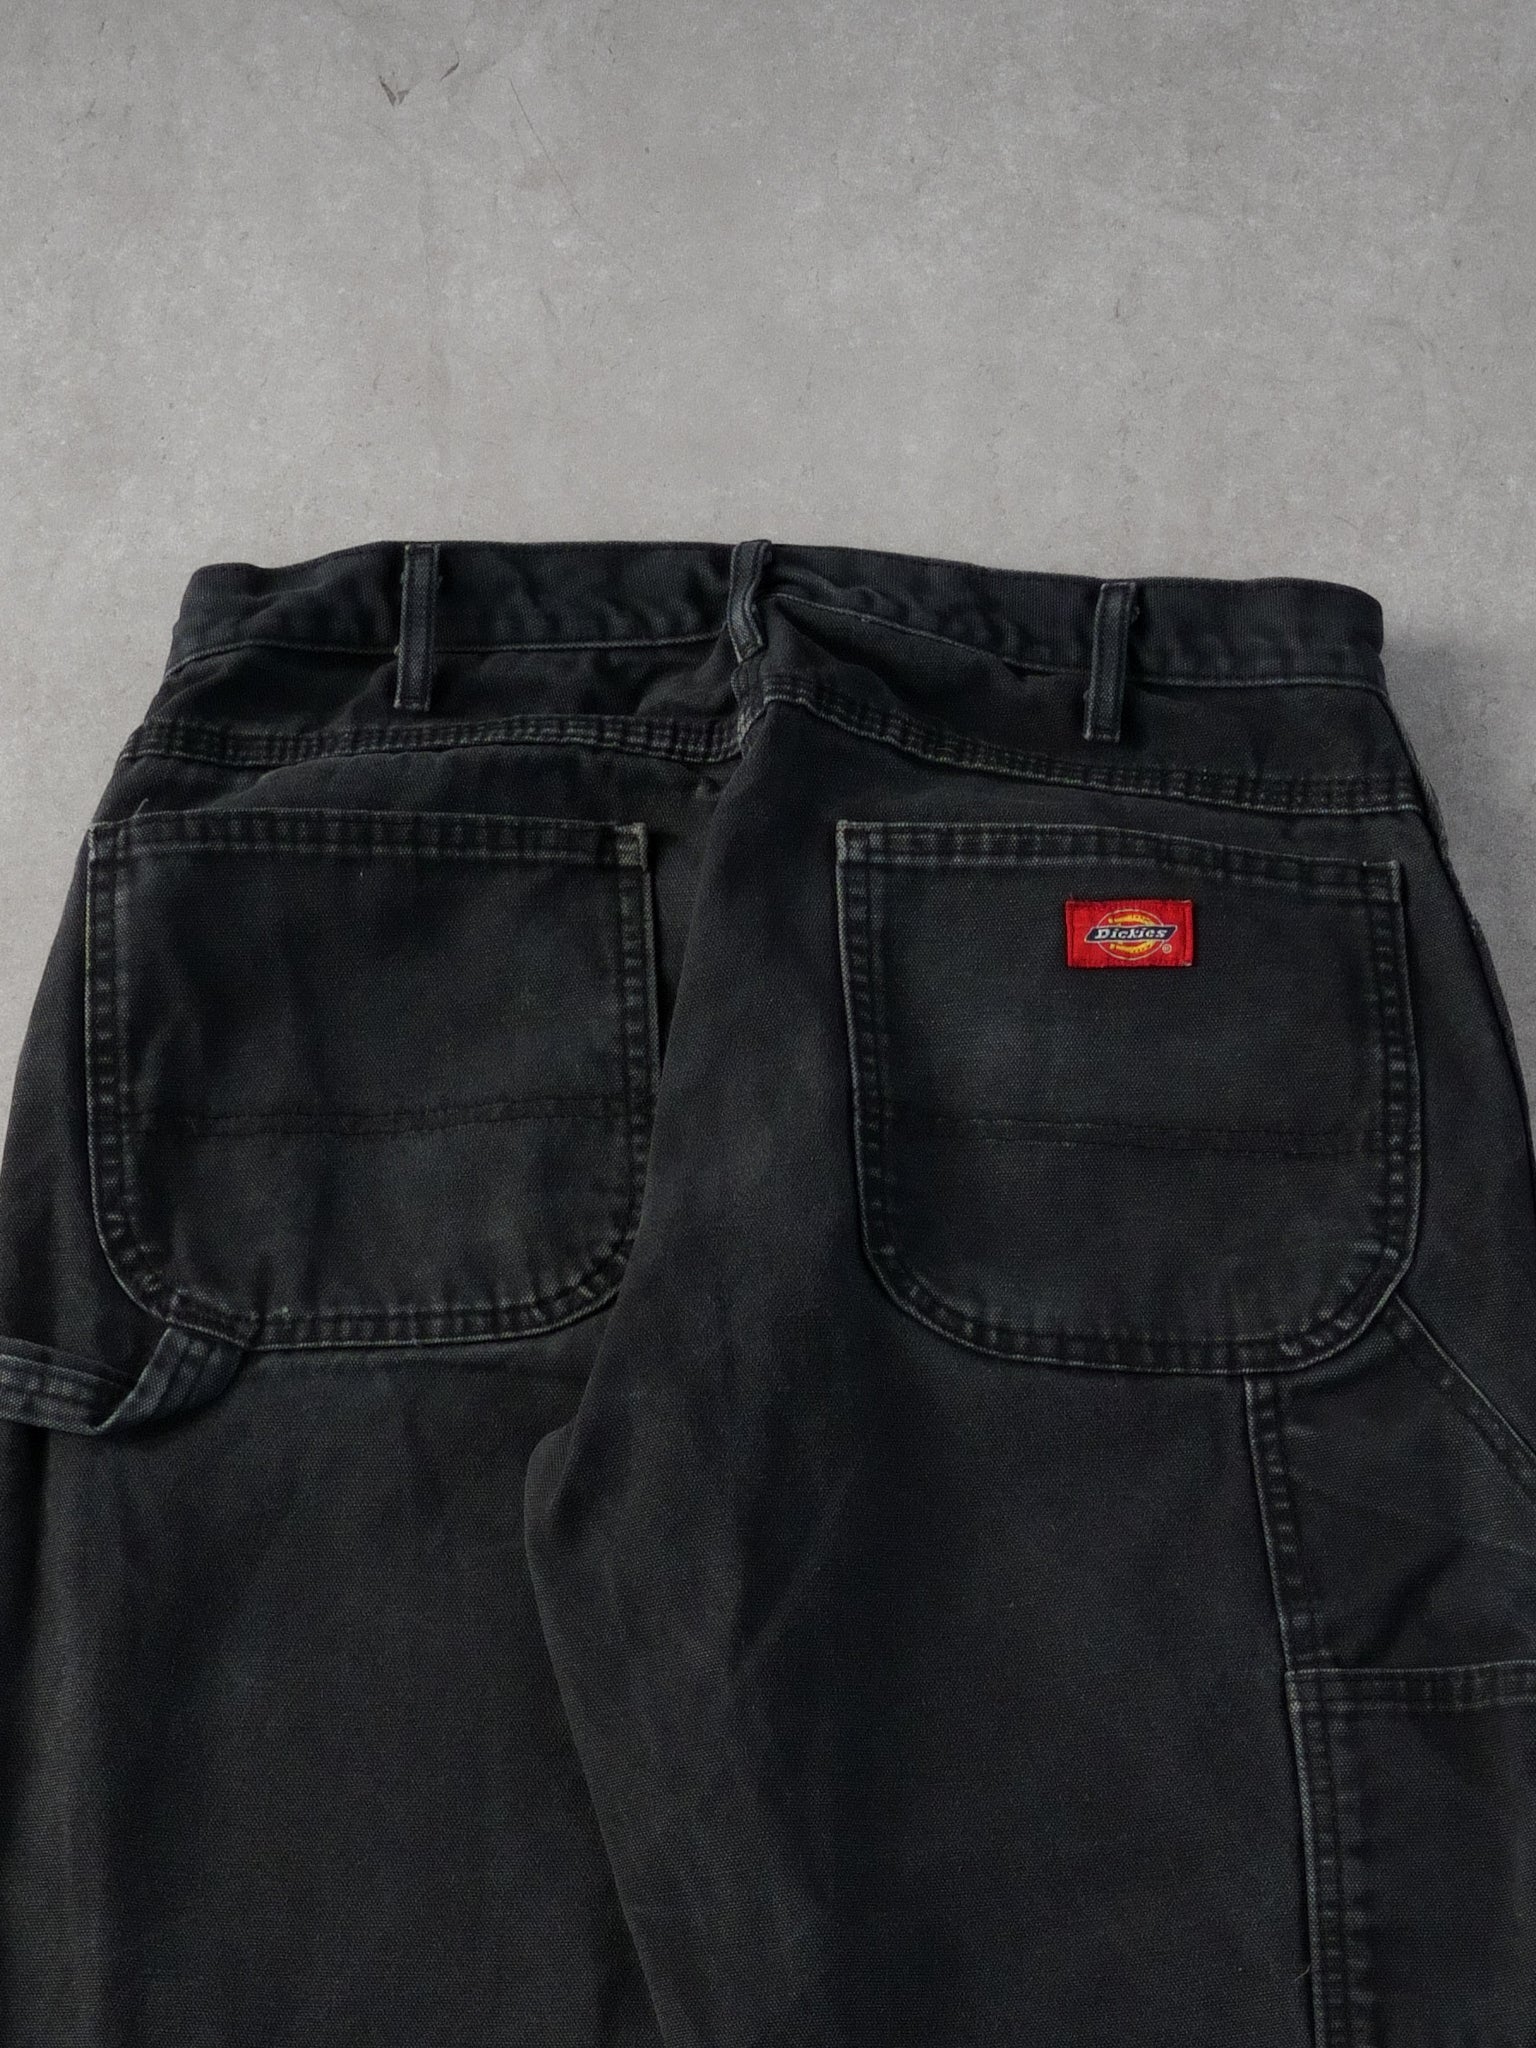 Vintage 90s Washed Black Dickies Carpenter Pants (32x33)